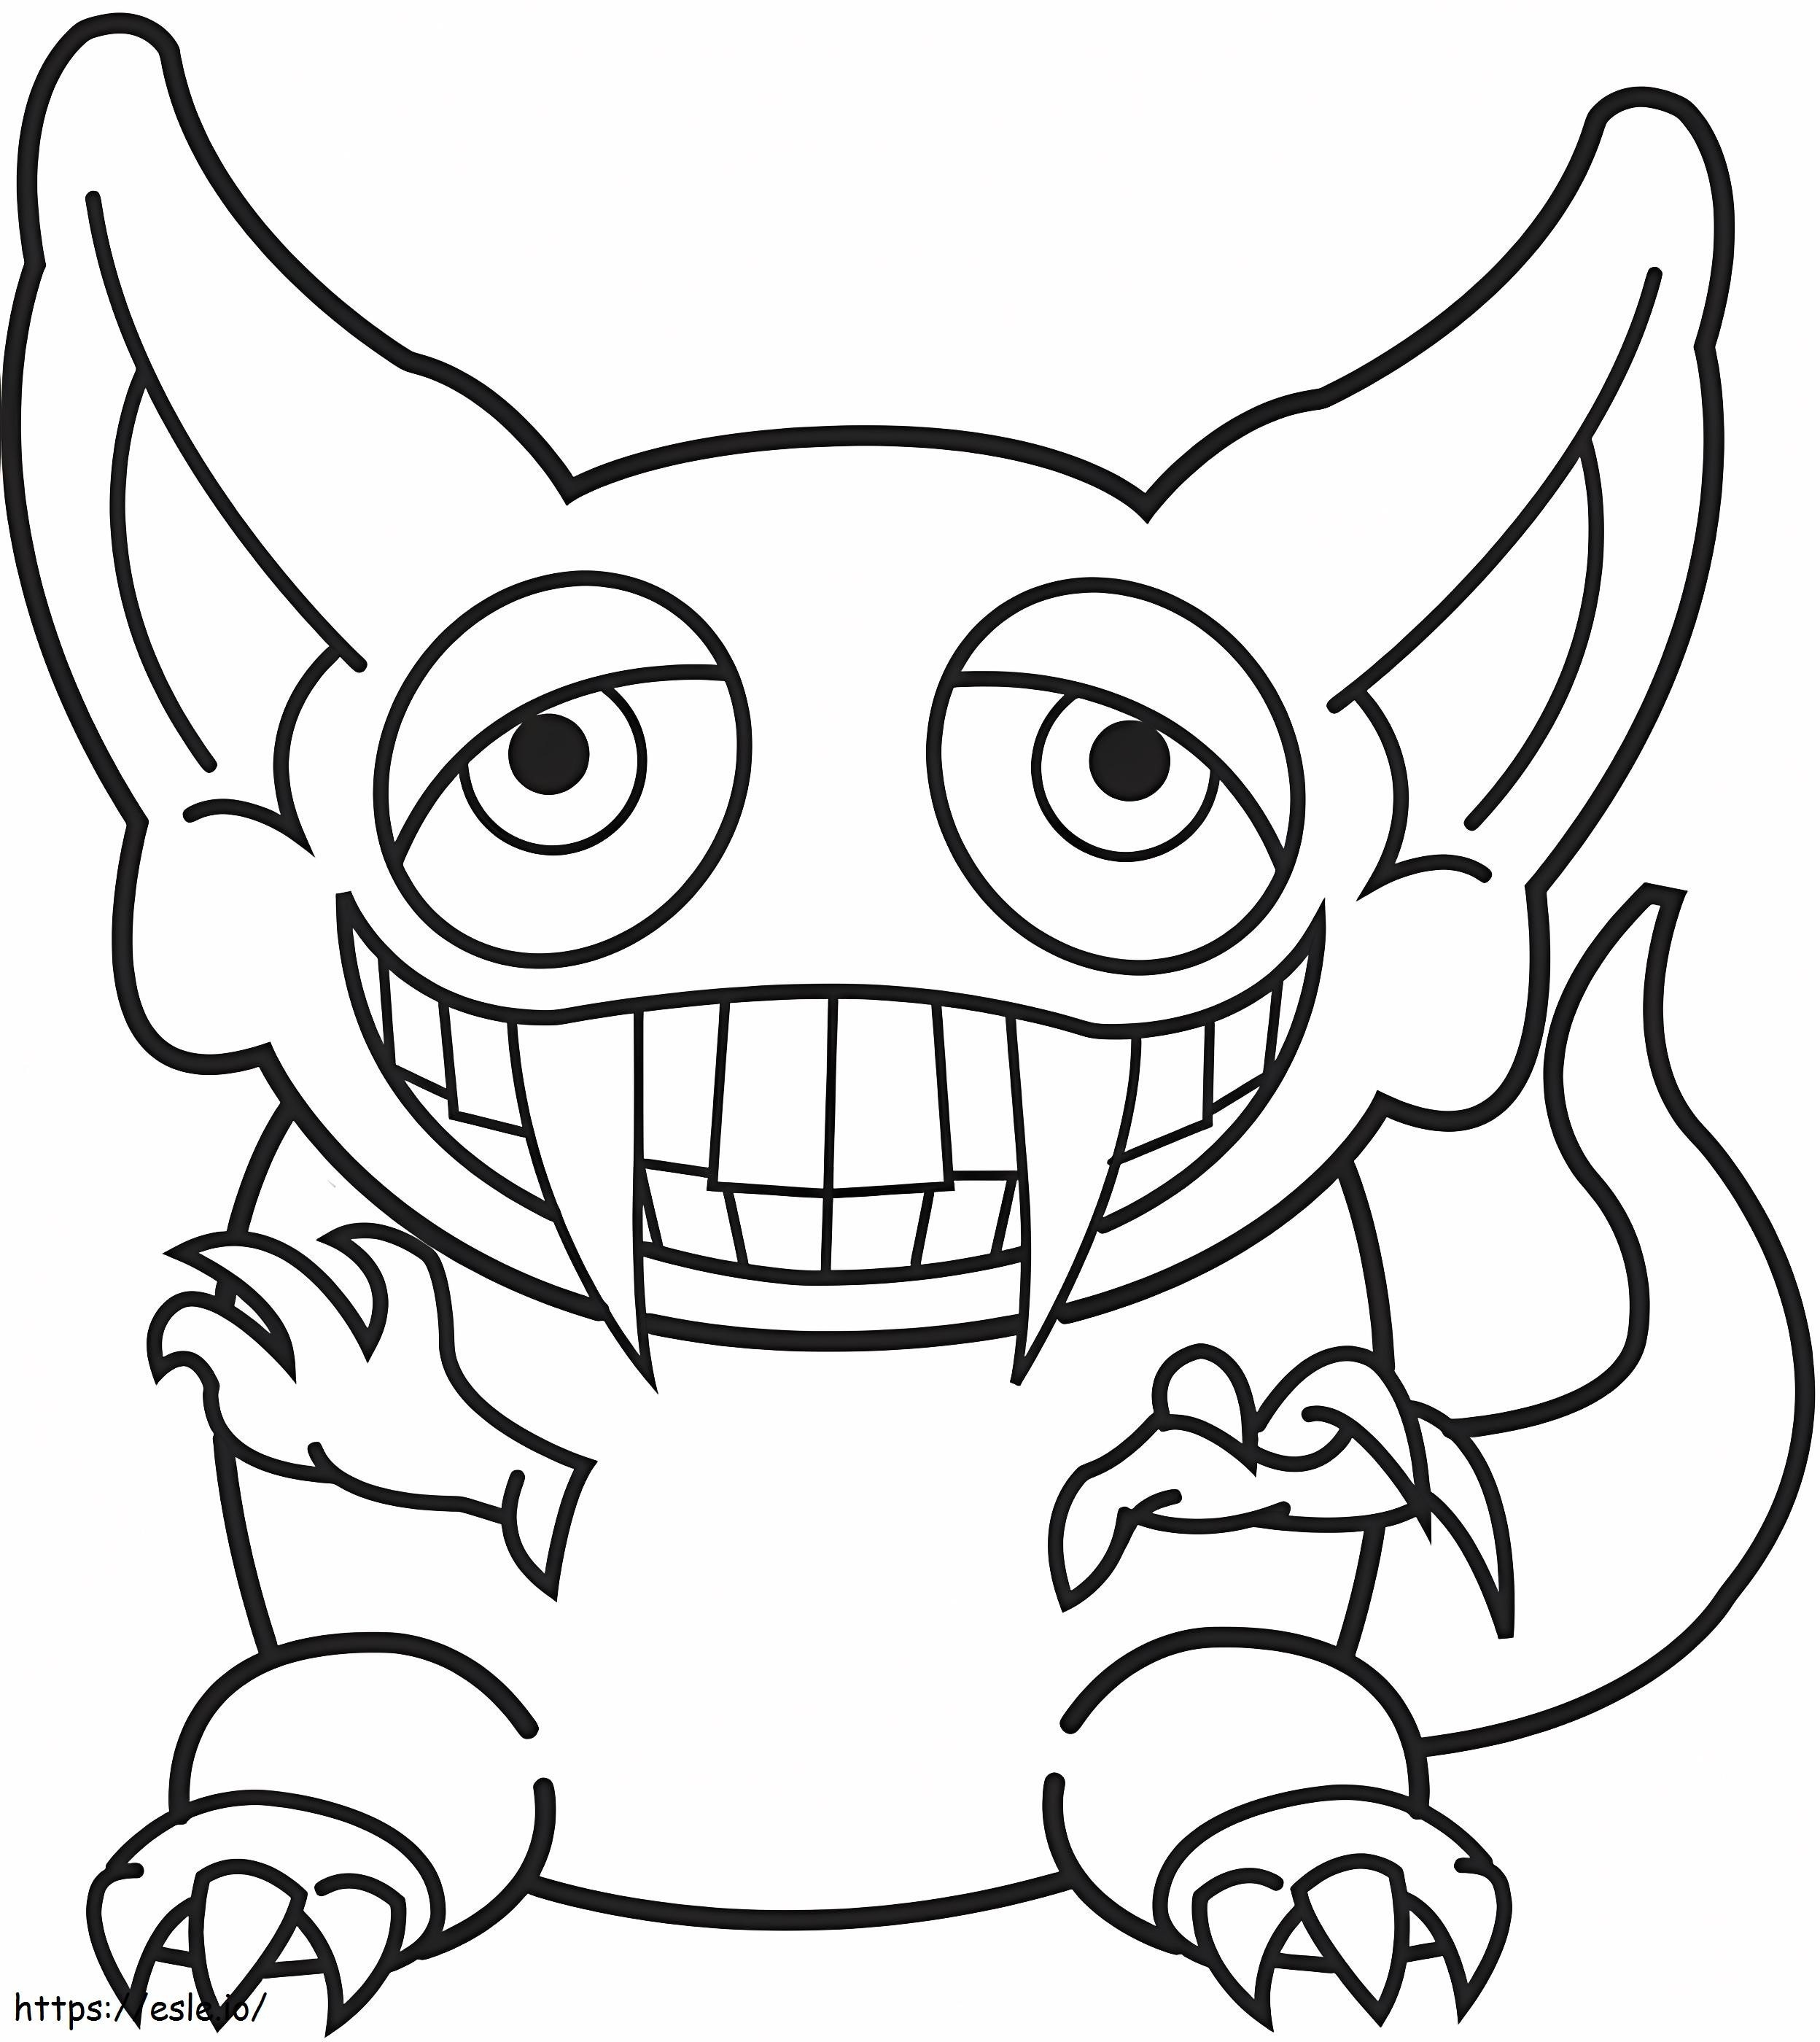 Halloween Goblin coloring page